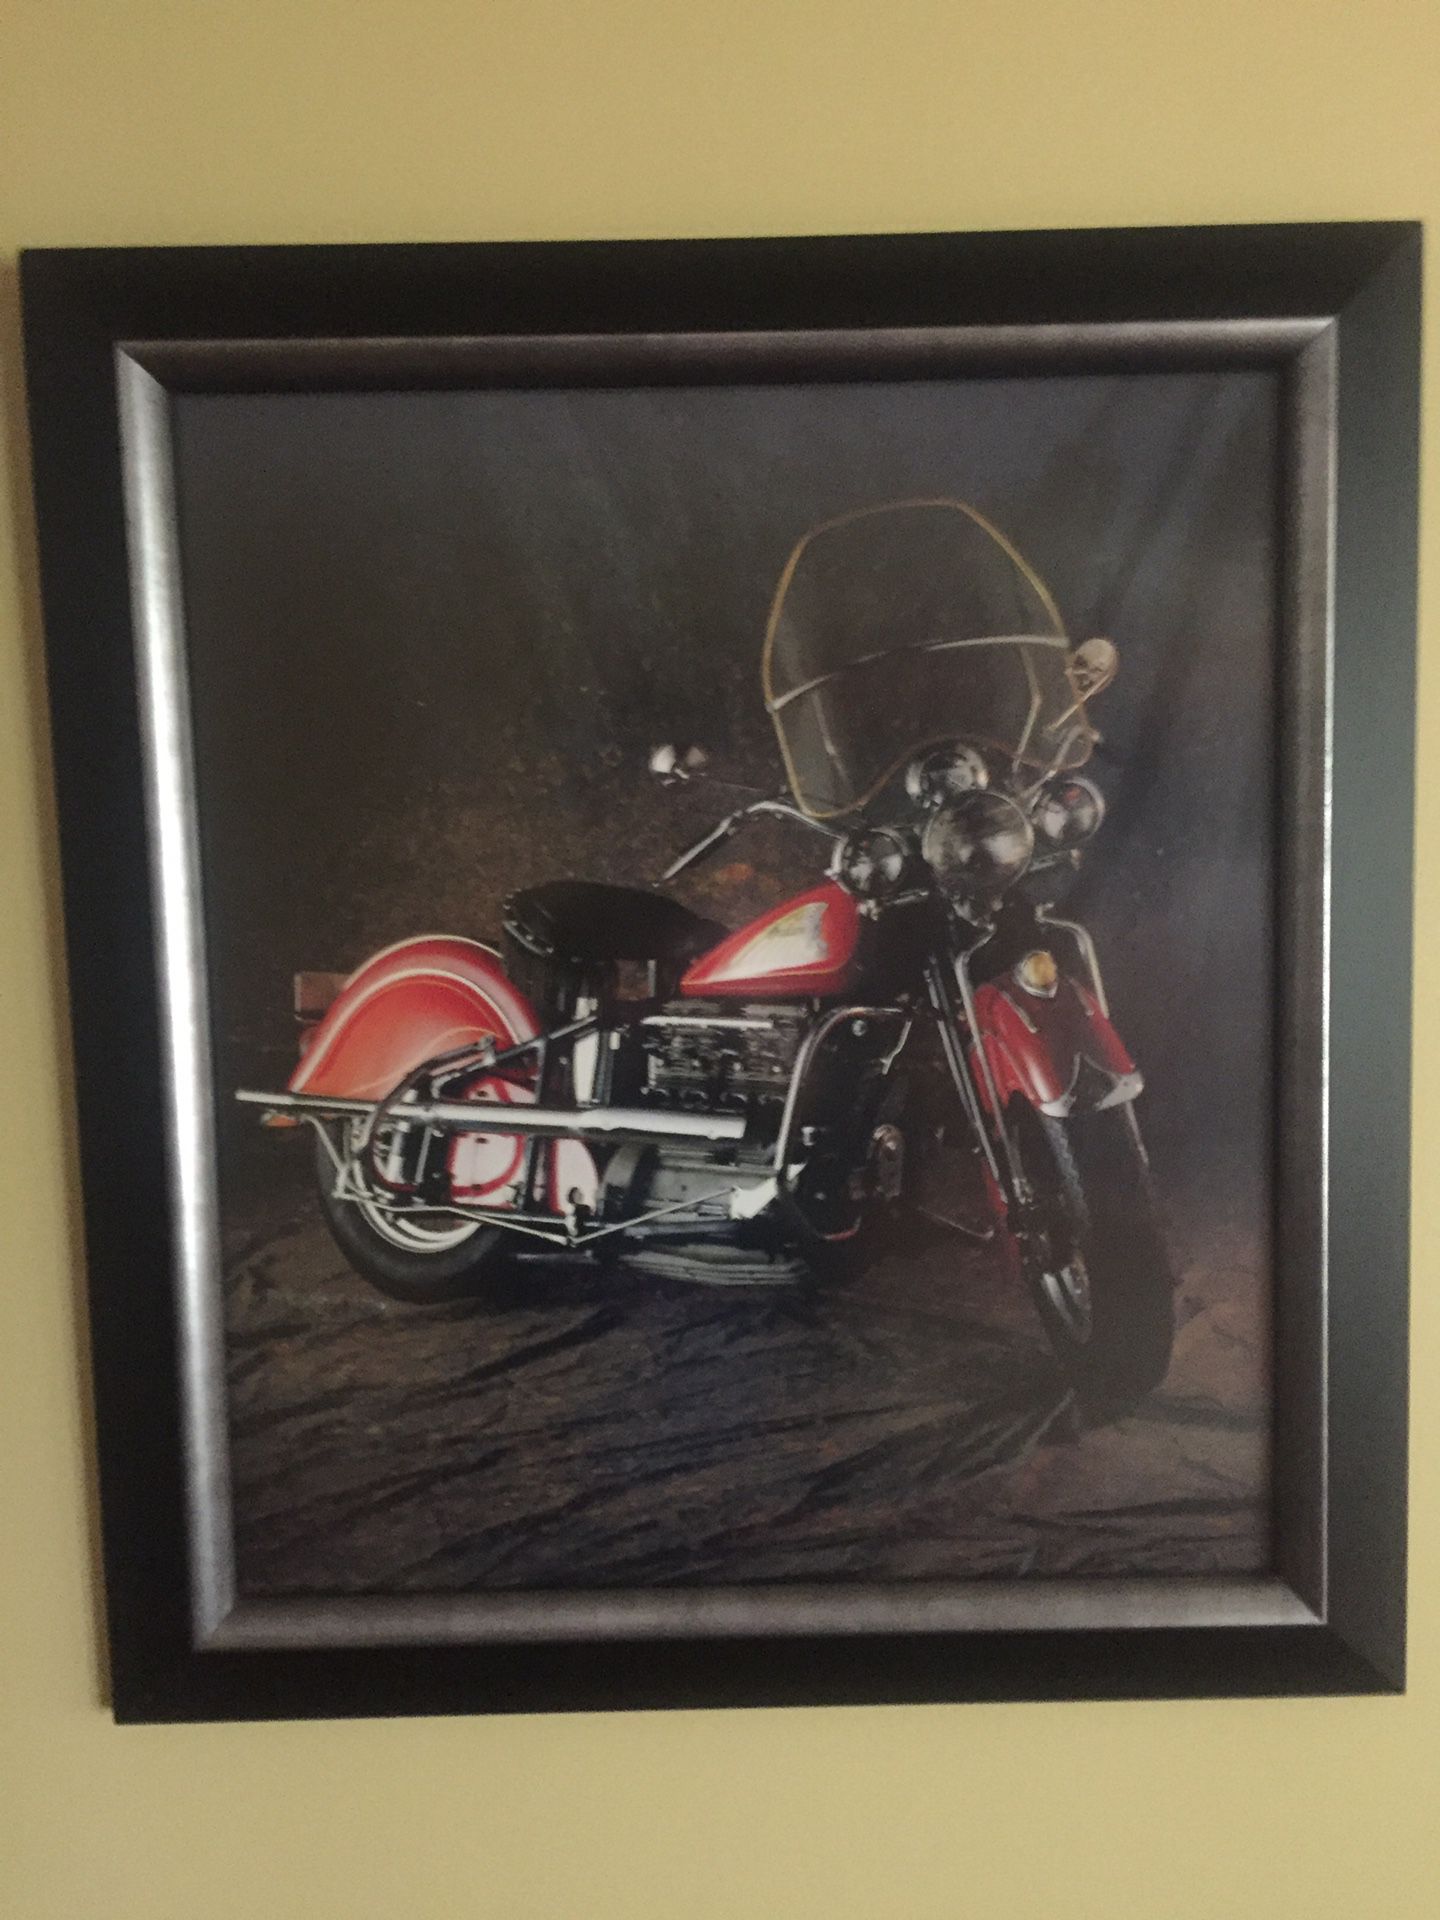 PRICE DROP Motorcycle framed art